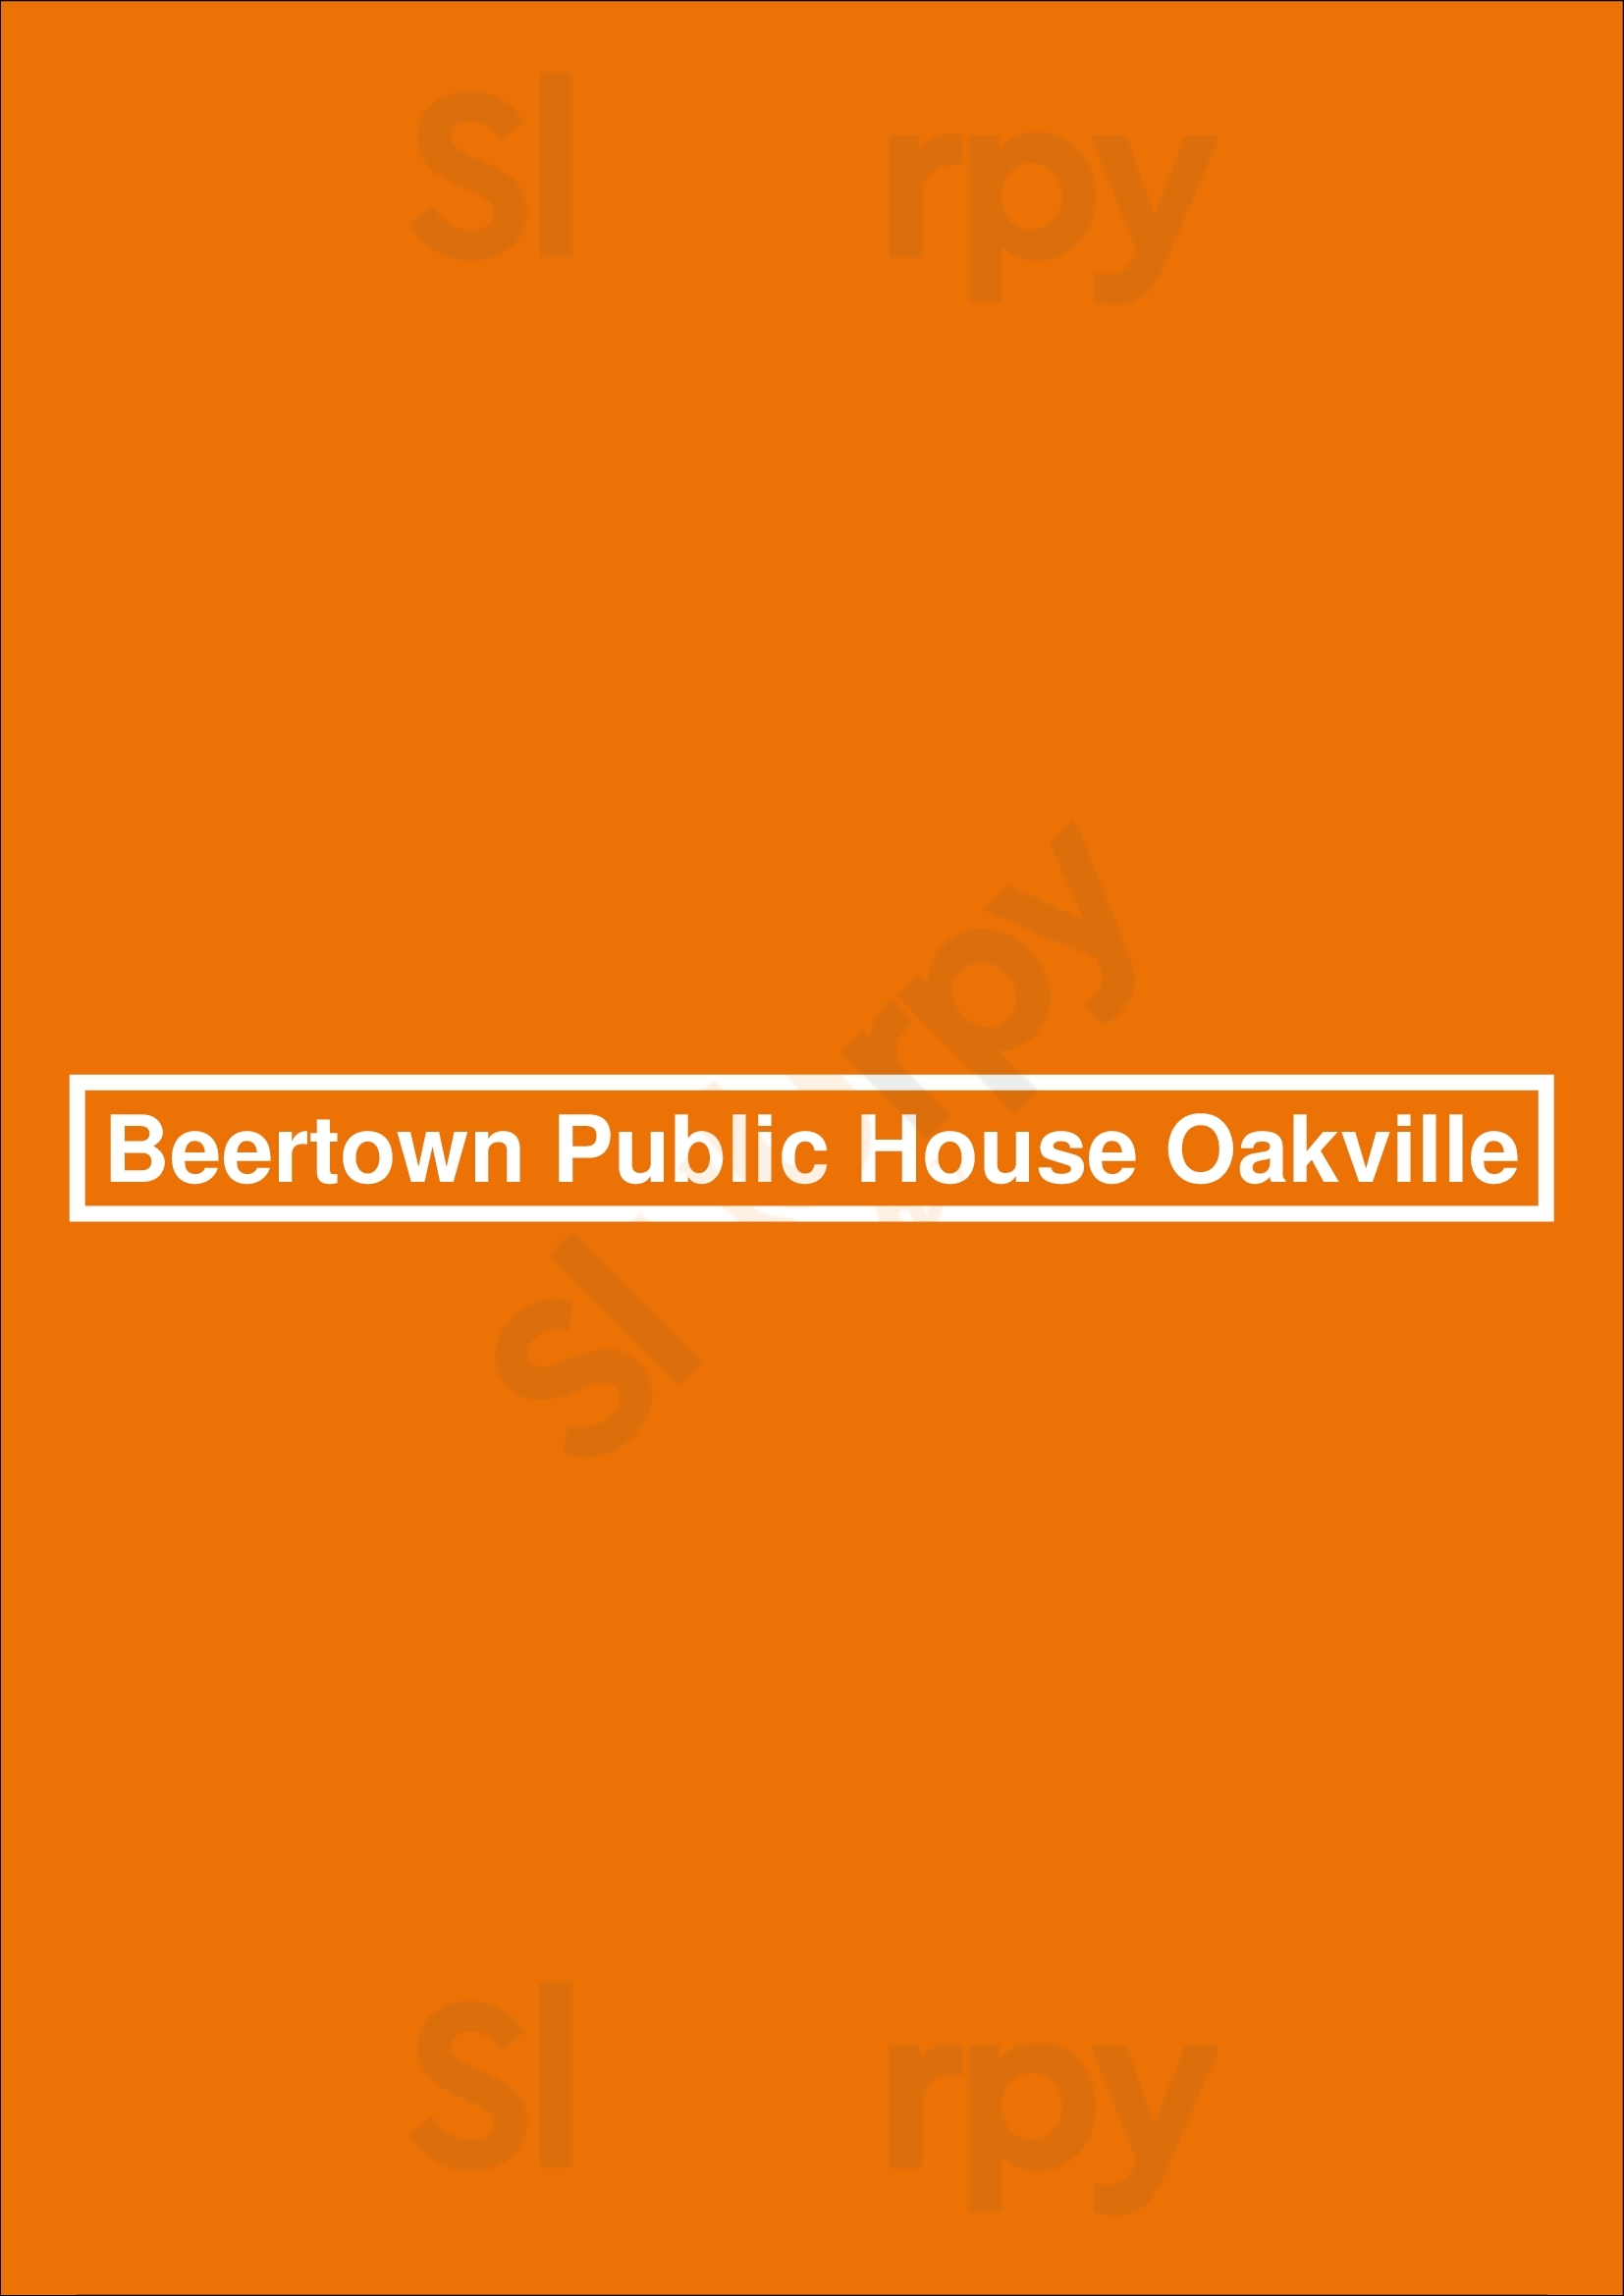 Beertown Public House Oakville Oakville Menu - 1